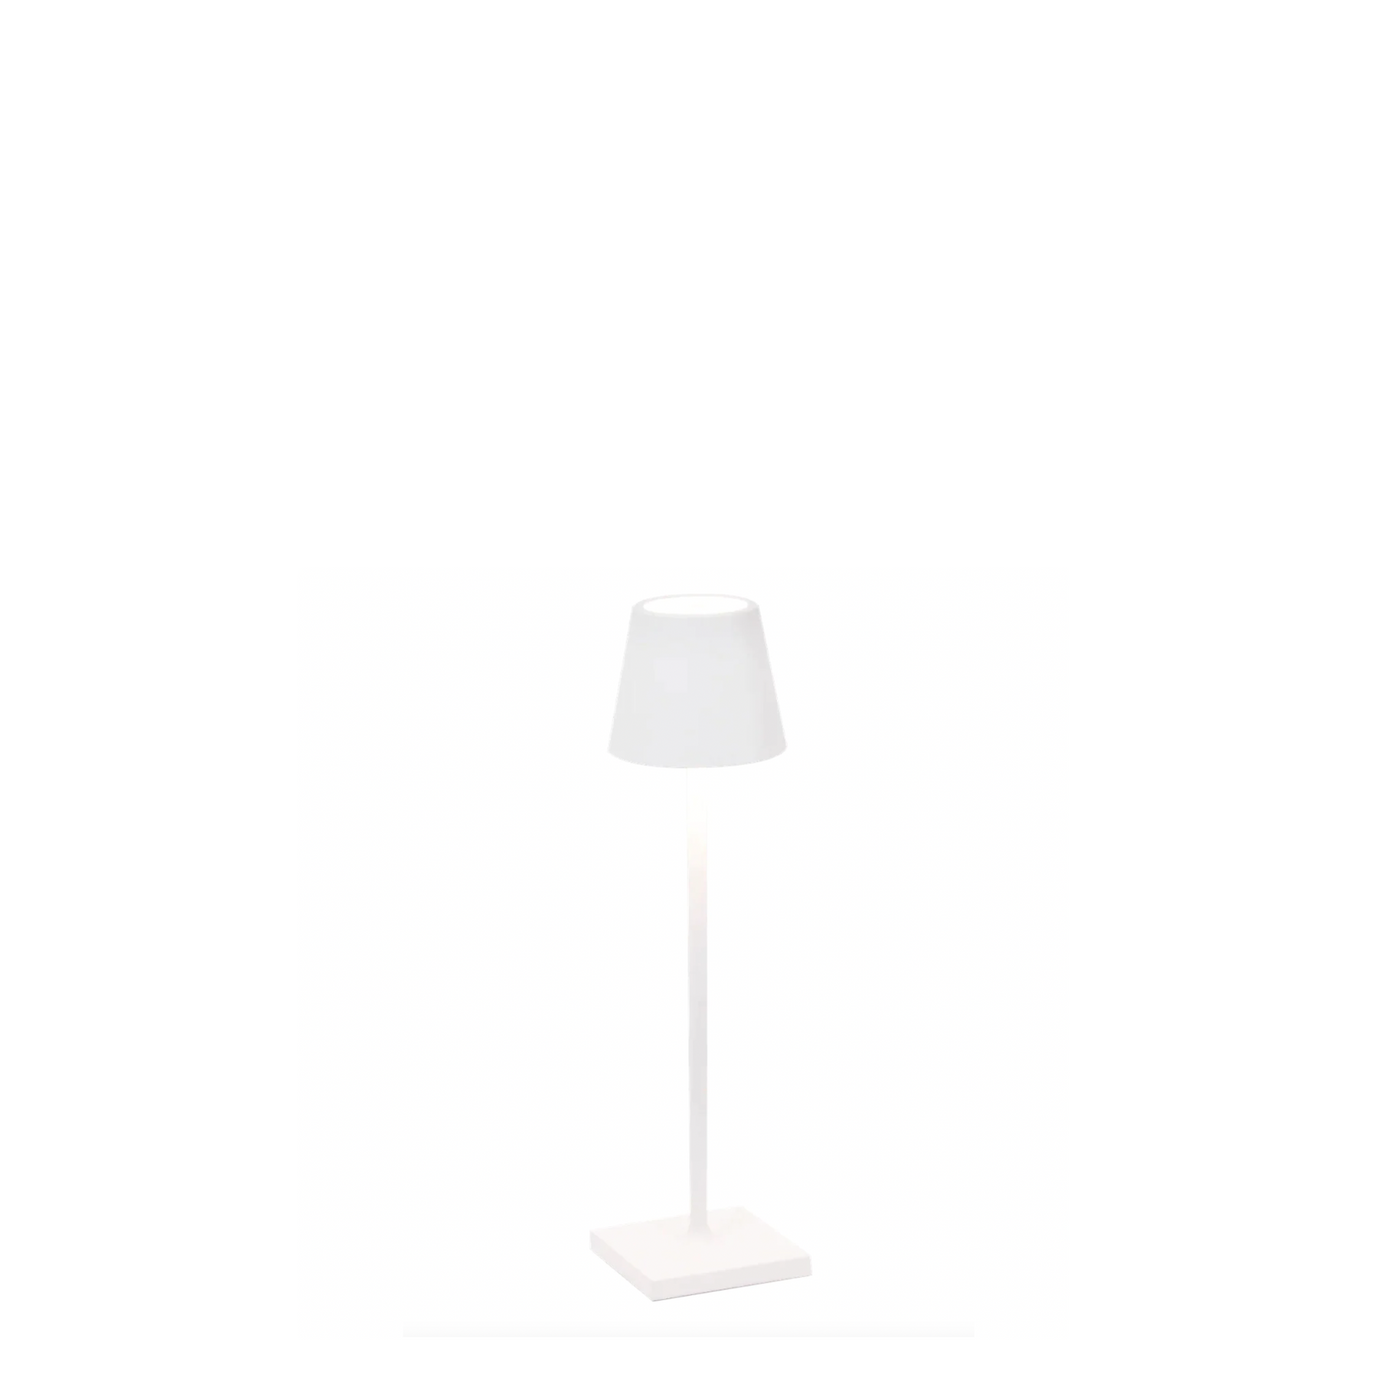 Poldina Pro Micro Cordless Table Lamp | Newport Lamp And Shade | Located in Newport, RI